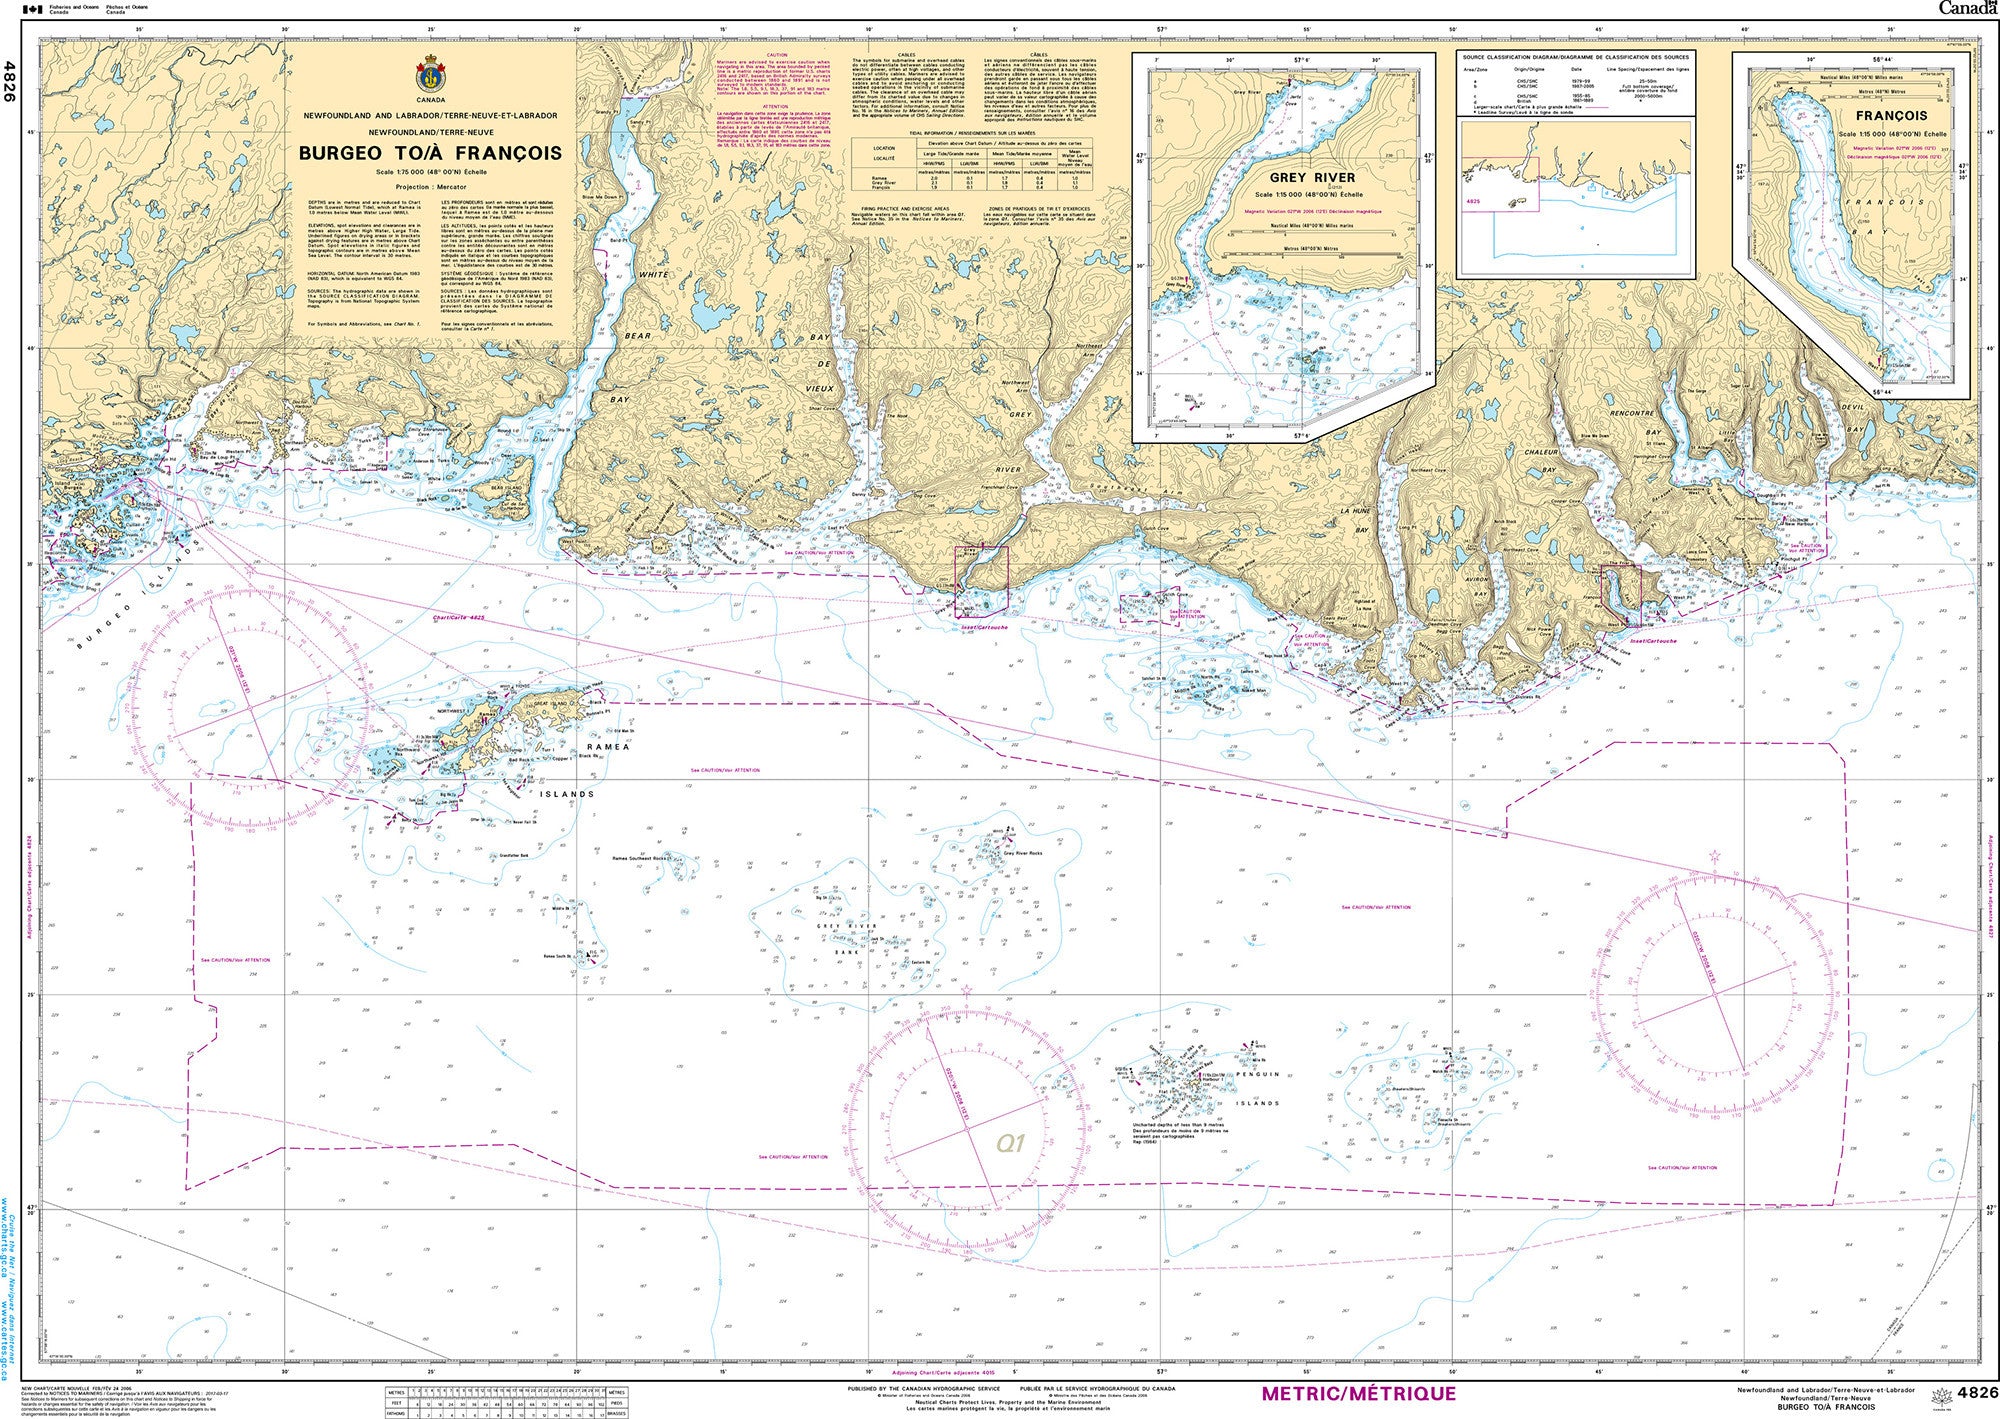 Canadian Hydrographic Service Nautical Chart CHS4826: Burgeo to/à François